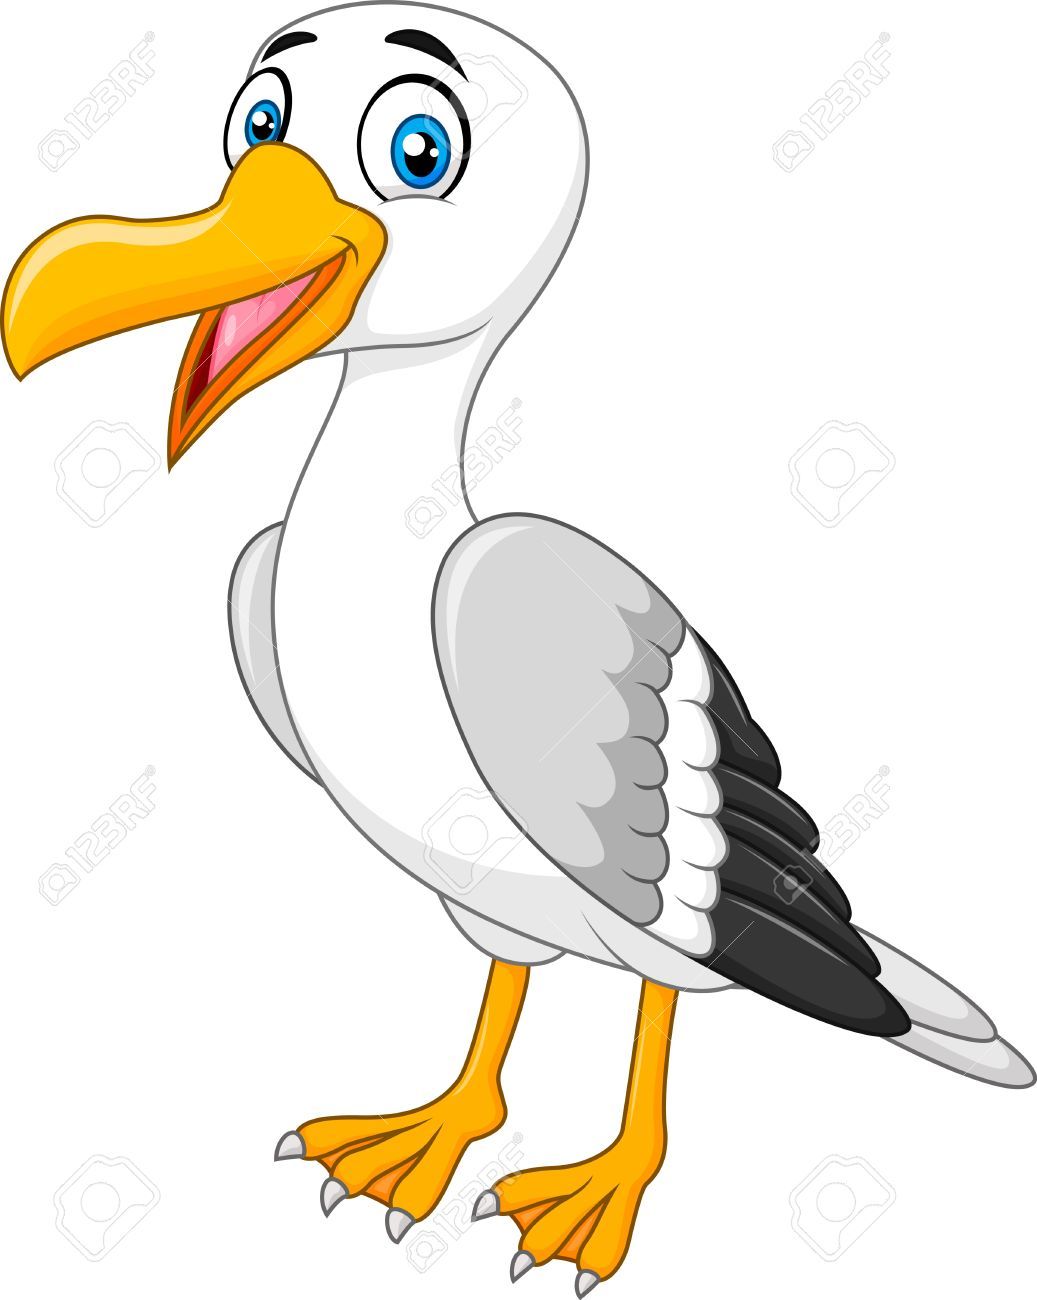 Cartoon seagull clipart » Clipart Portal.